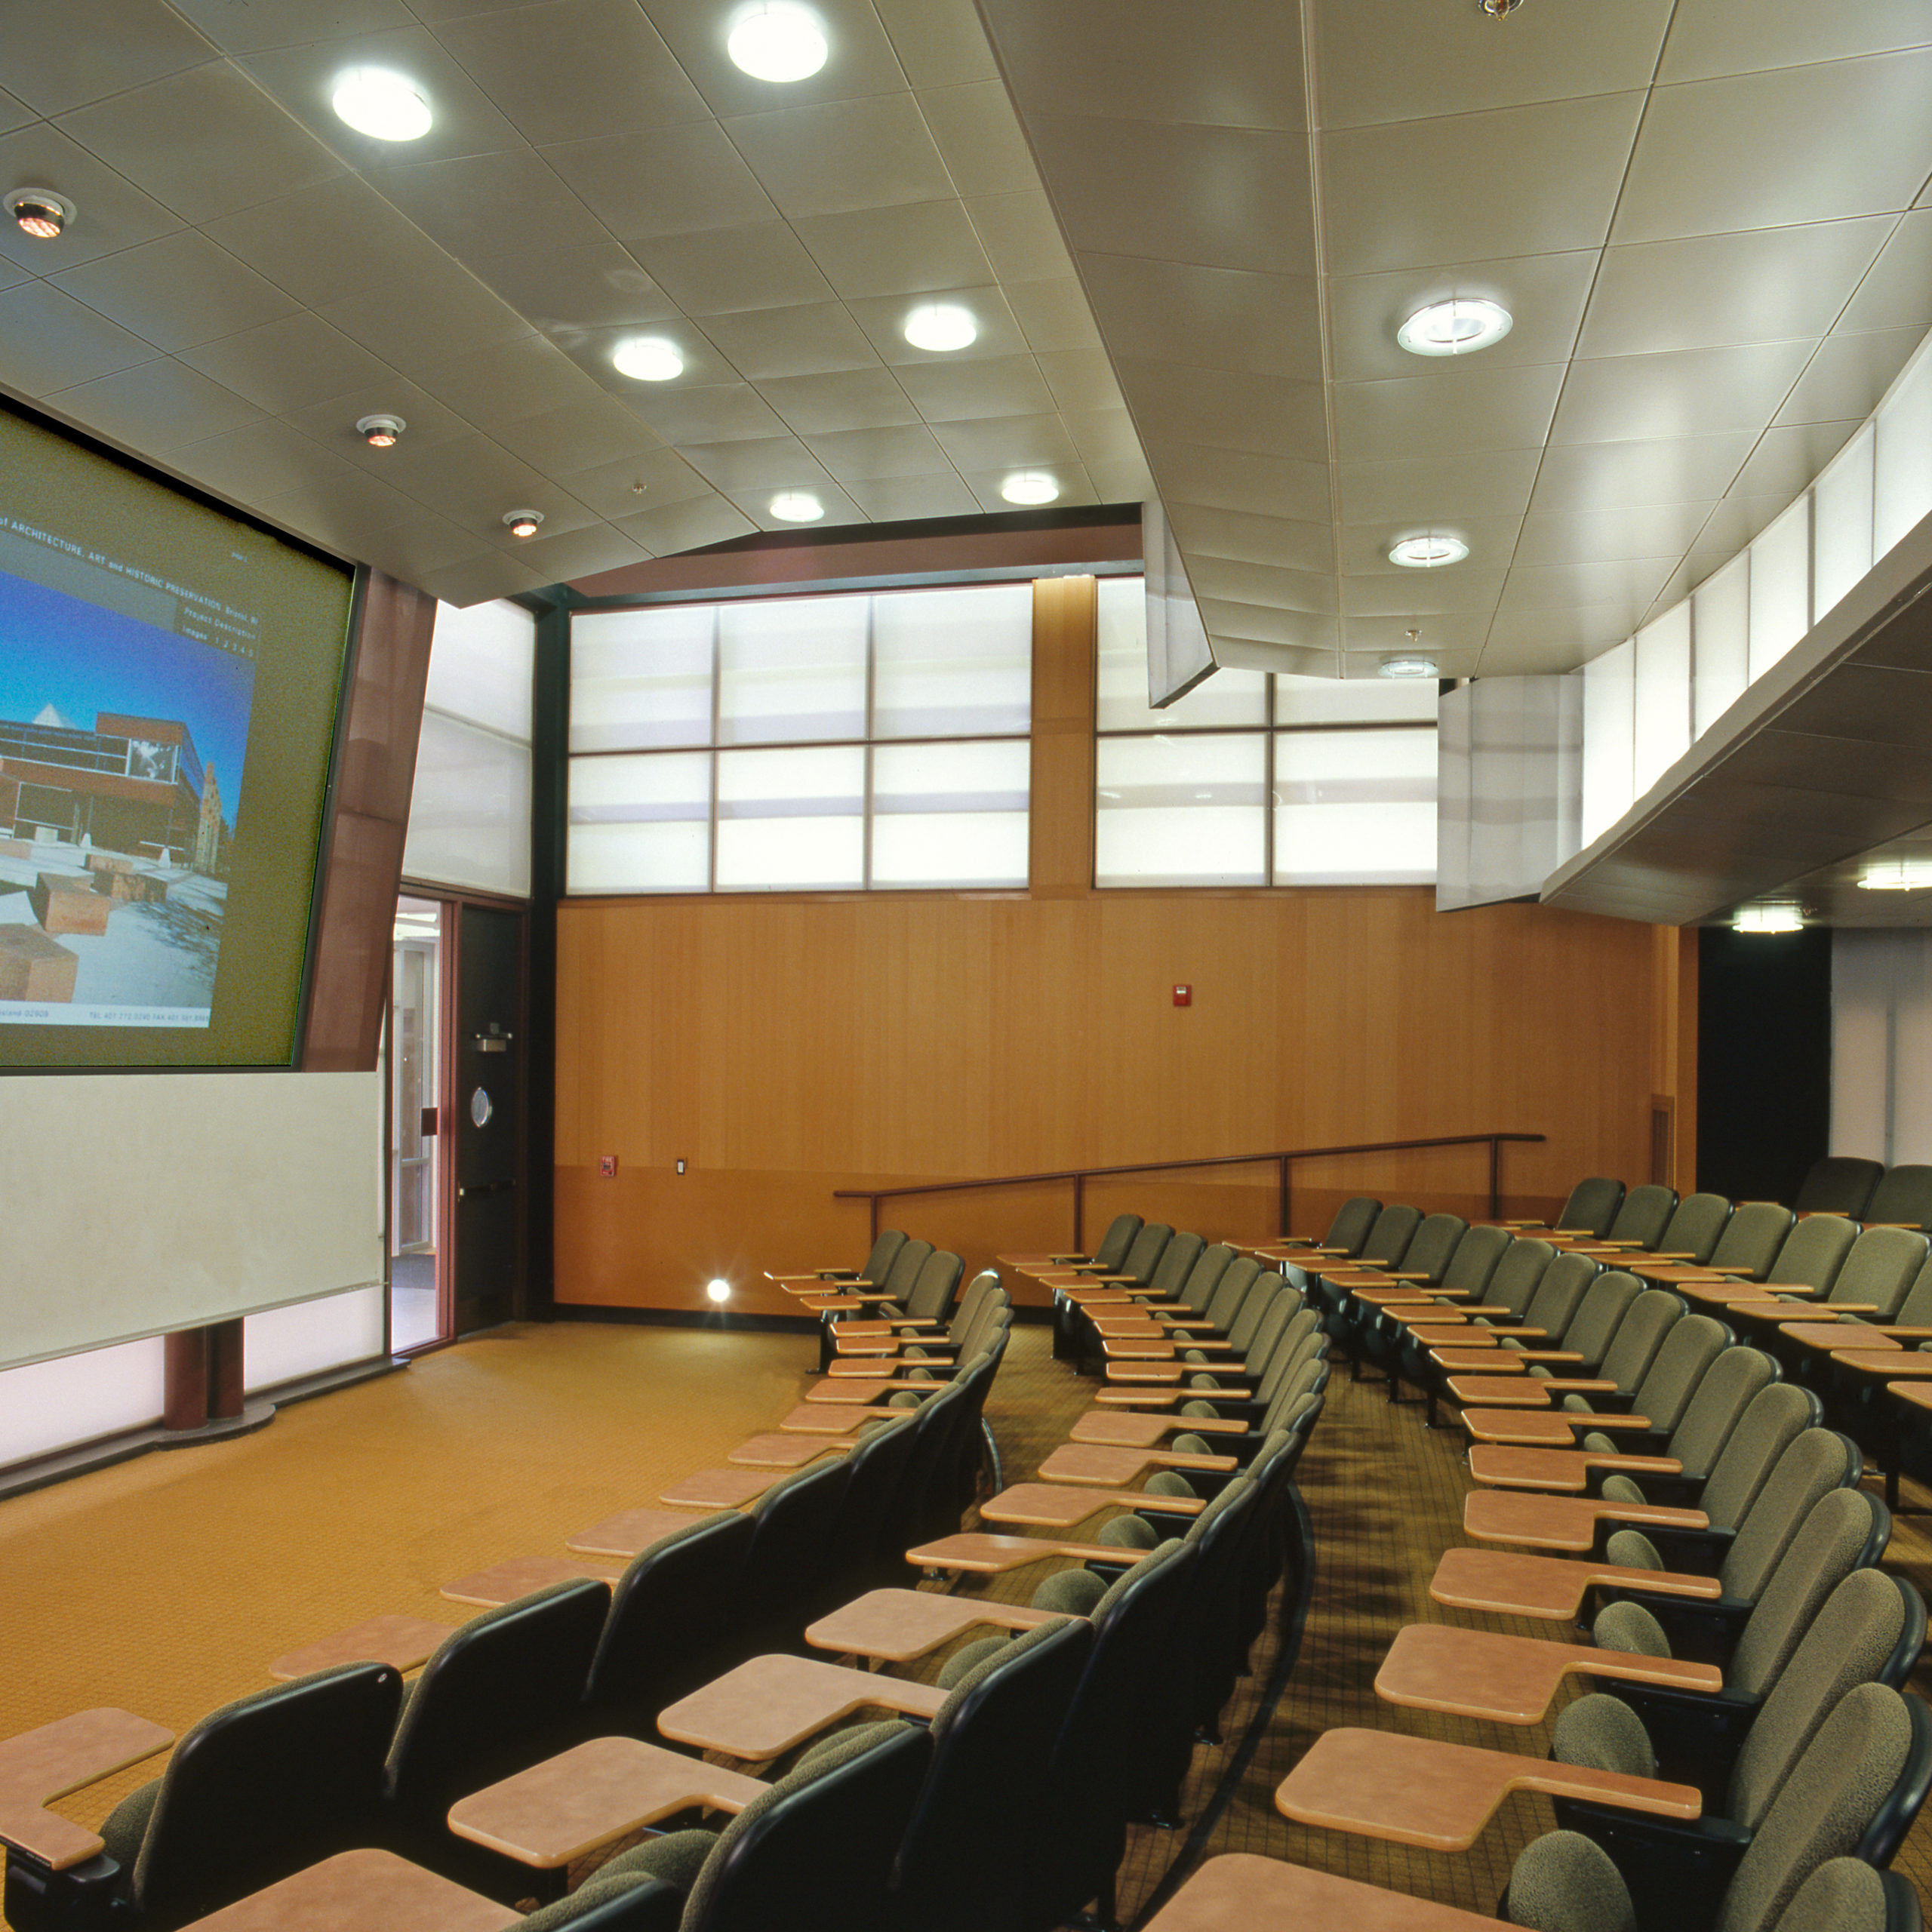 Kite_0361_Roger Williams_School of Architecture_Interior_Lecture Hall